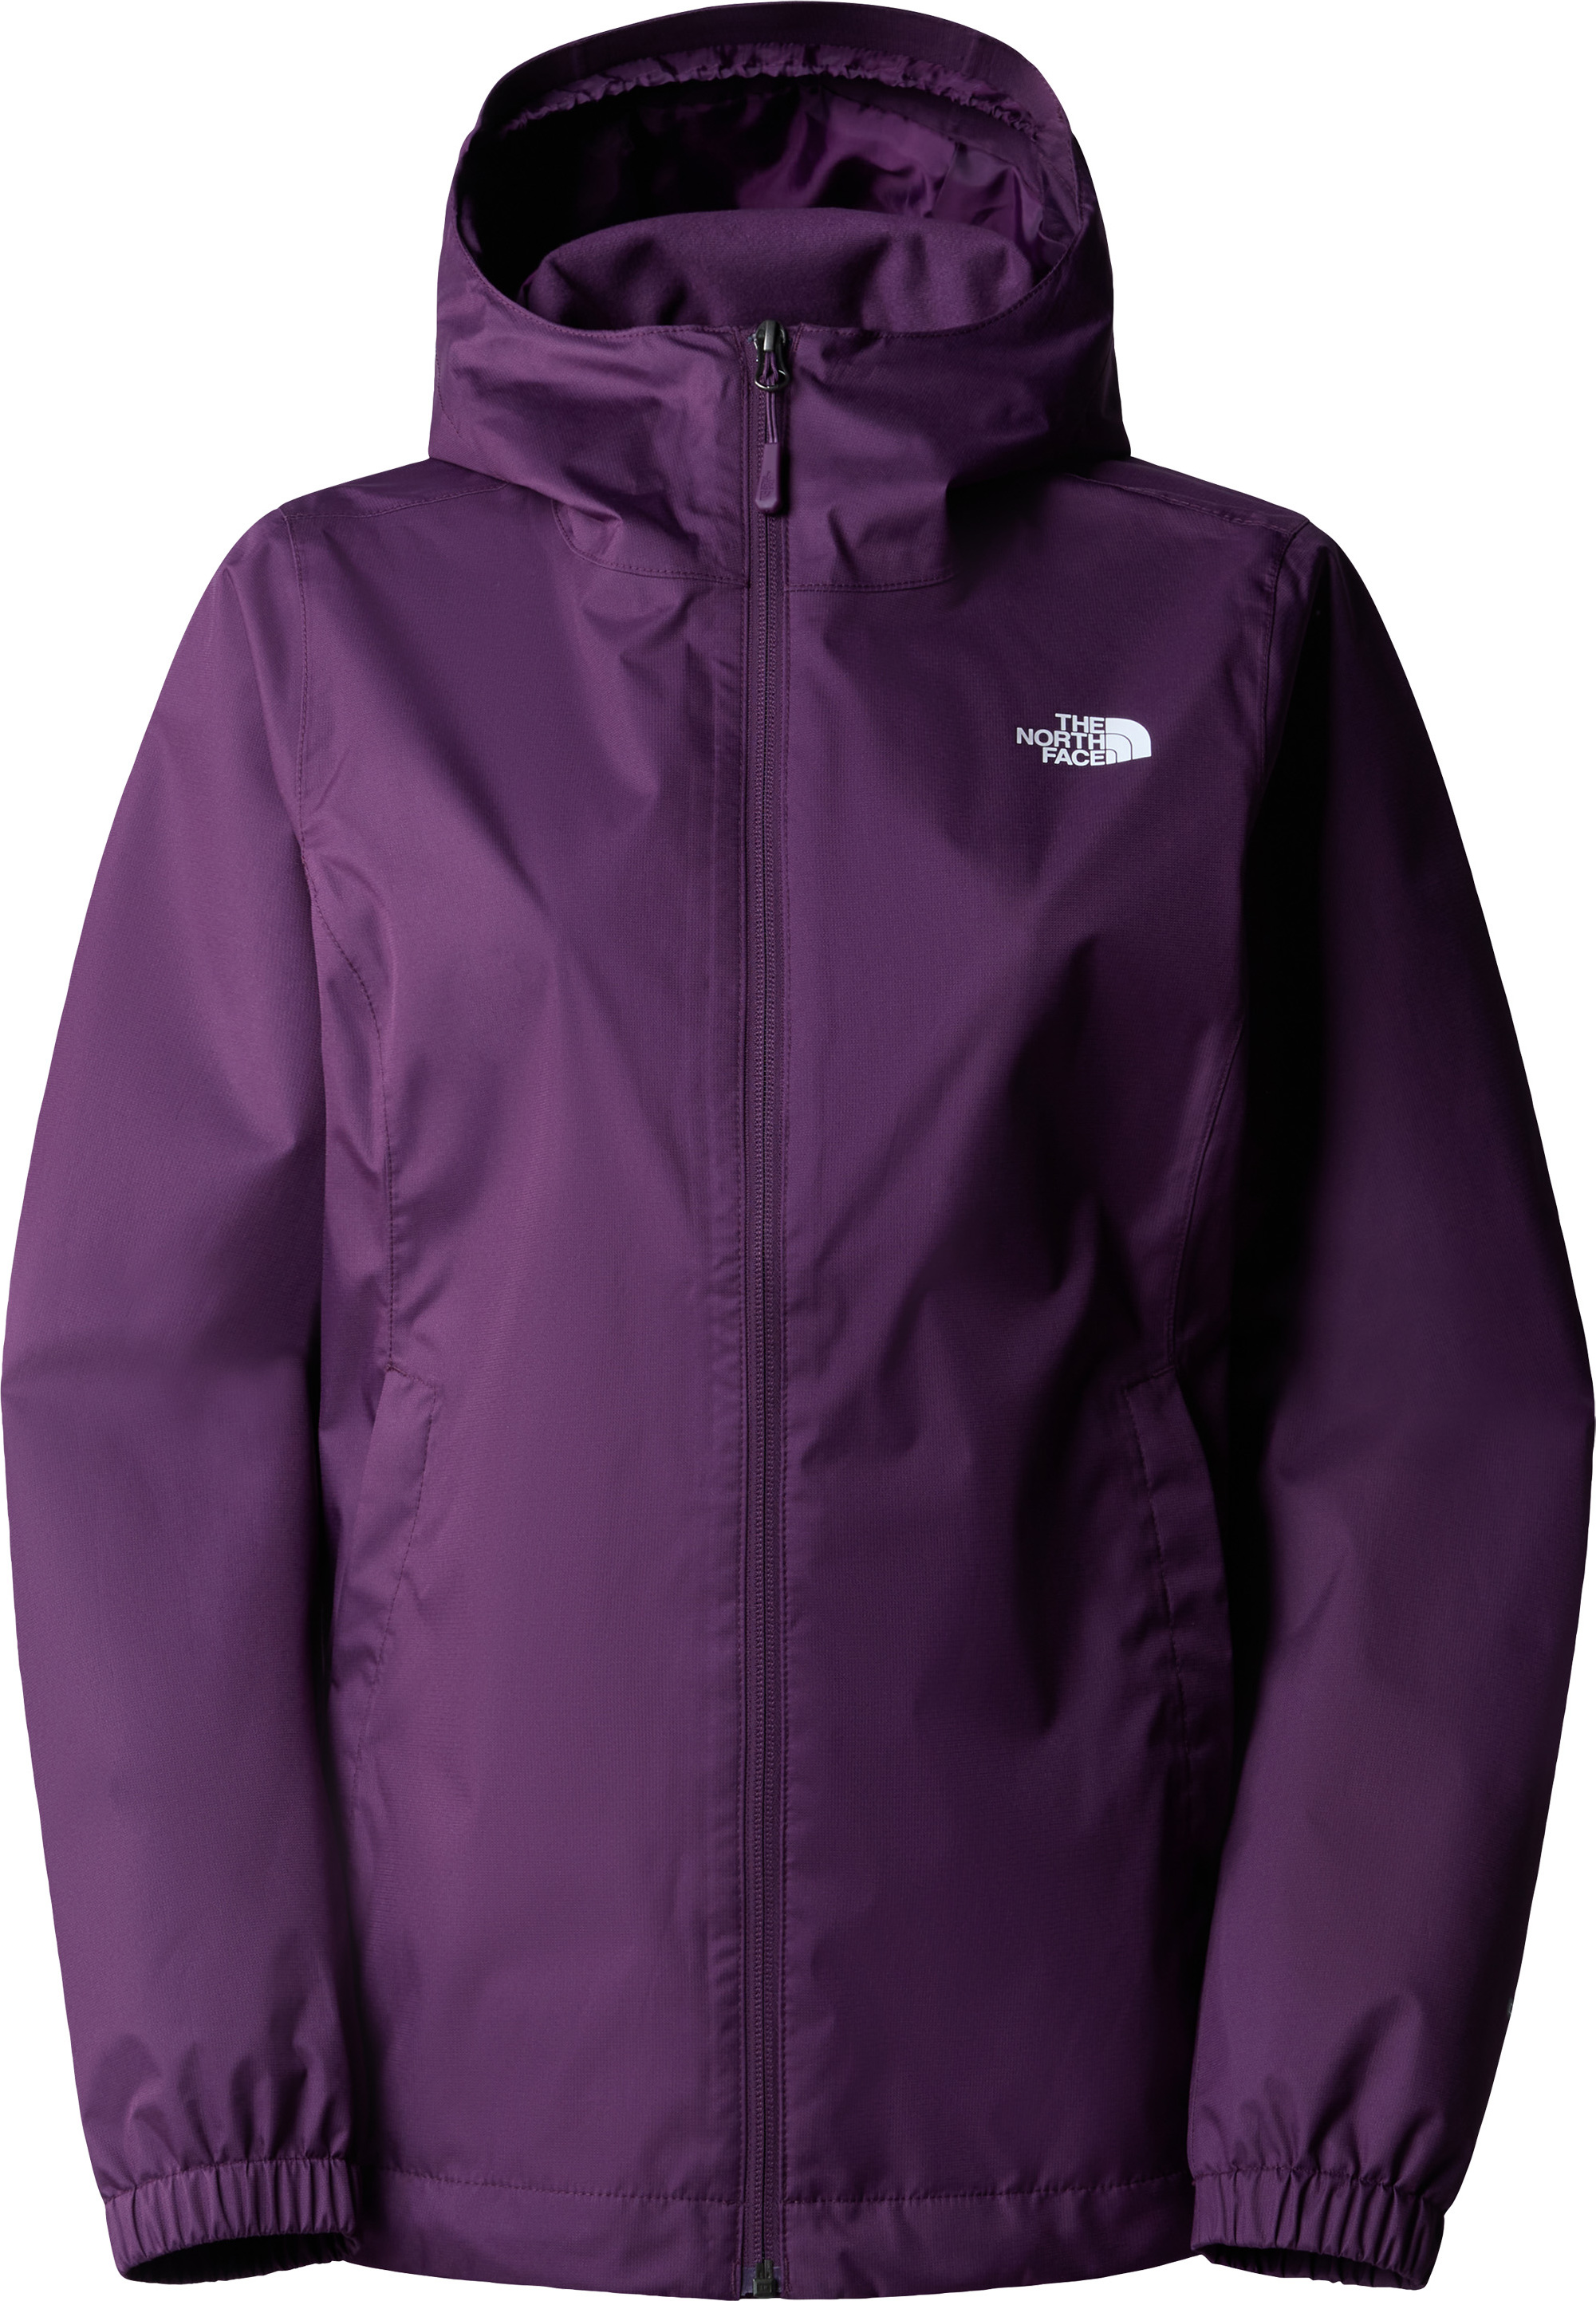 The North Face Women’s Quest Jacket Black Currant Purple